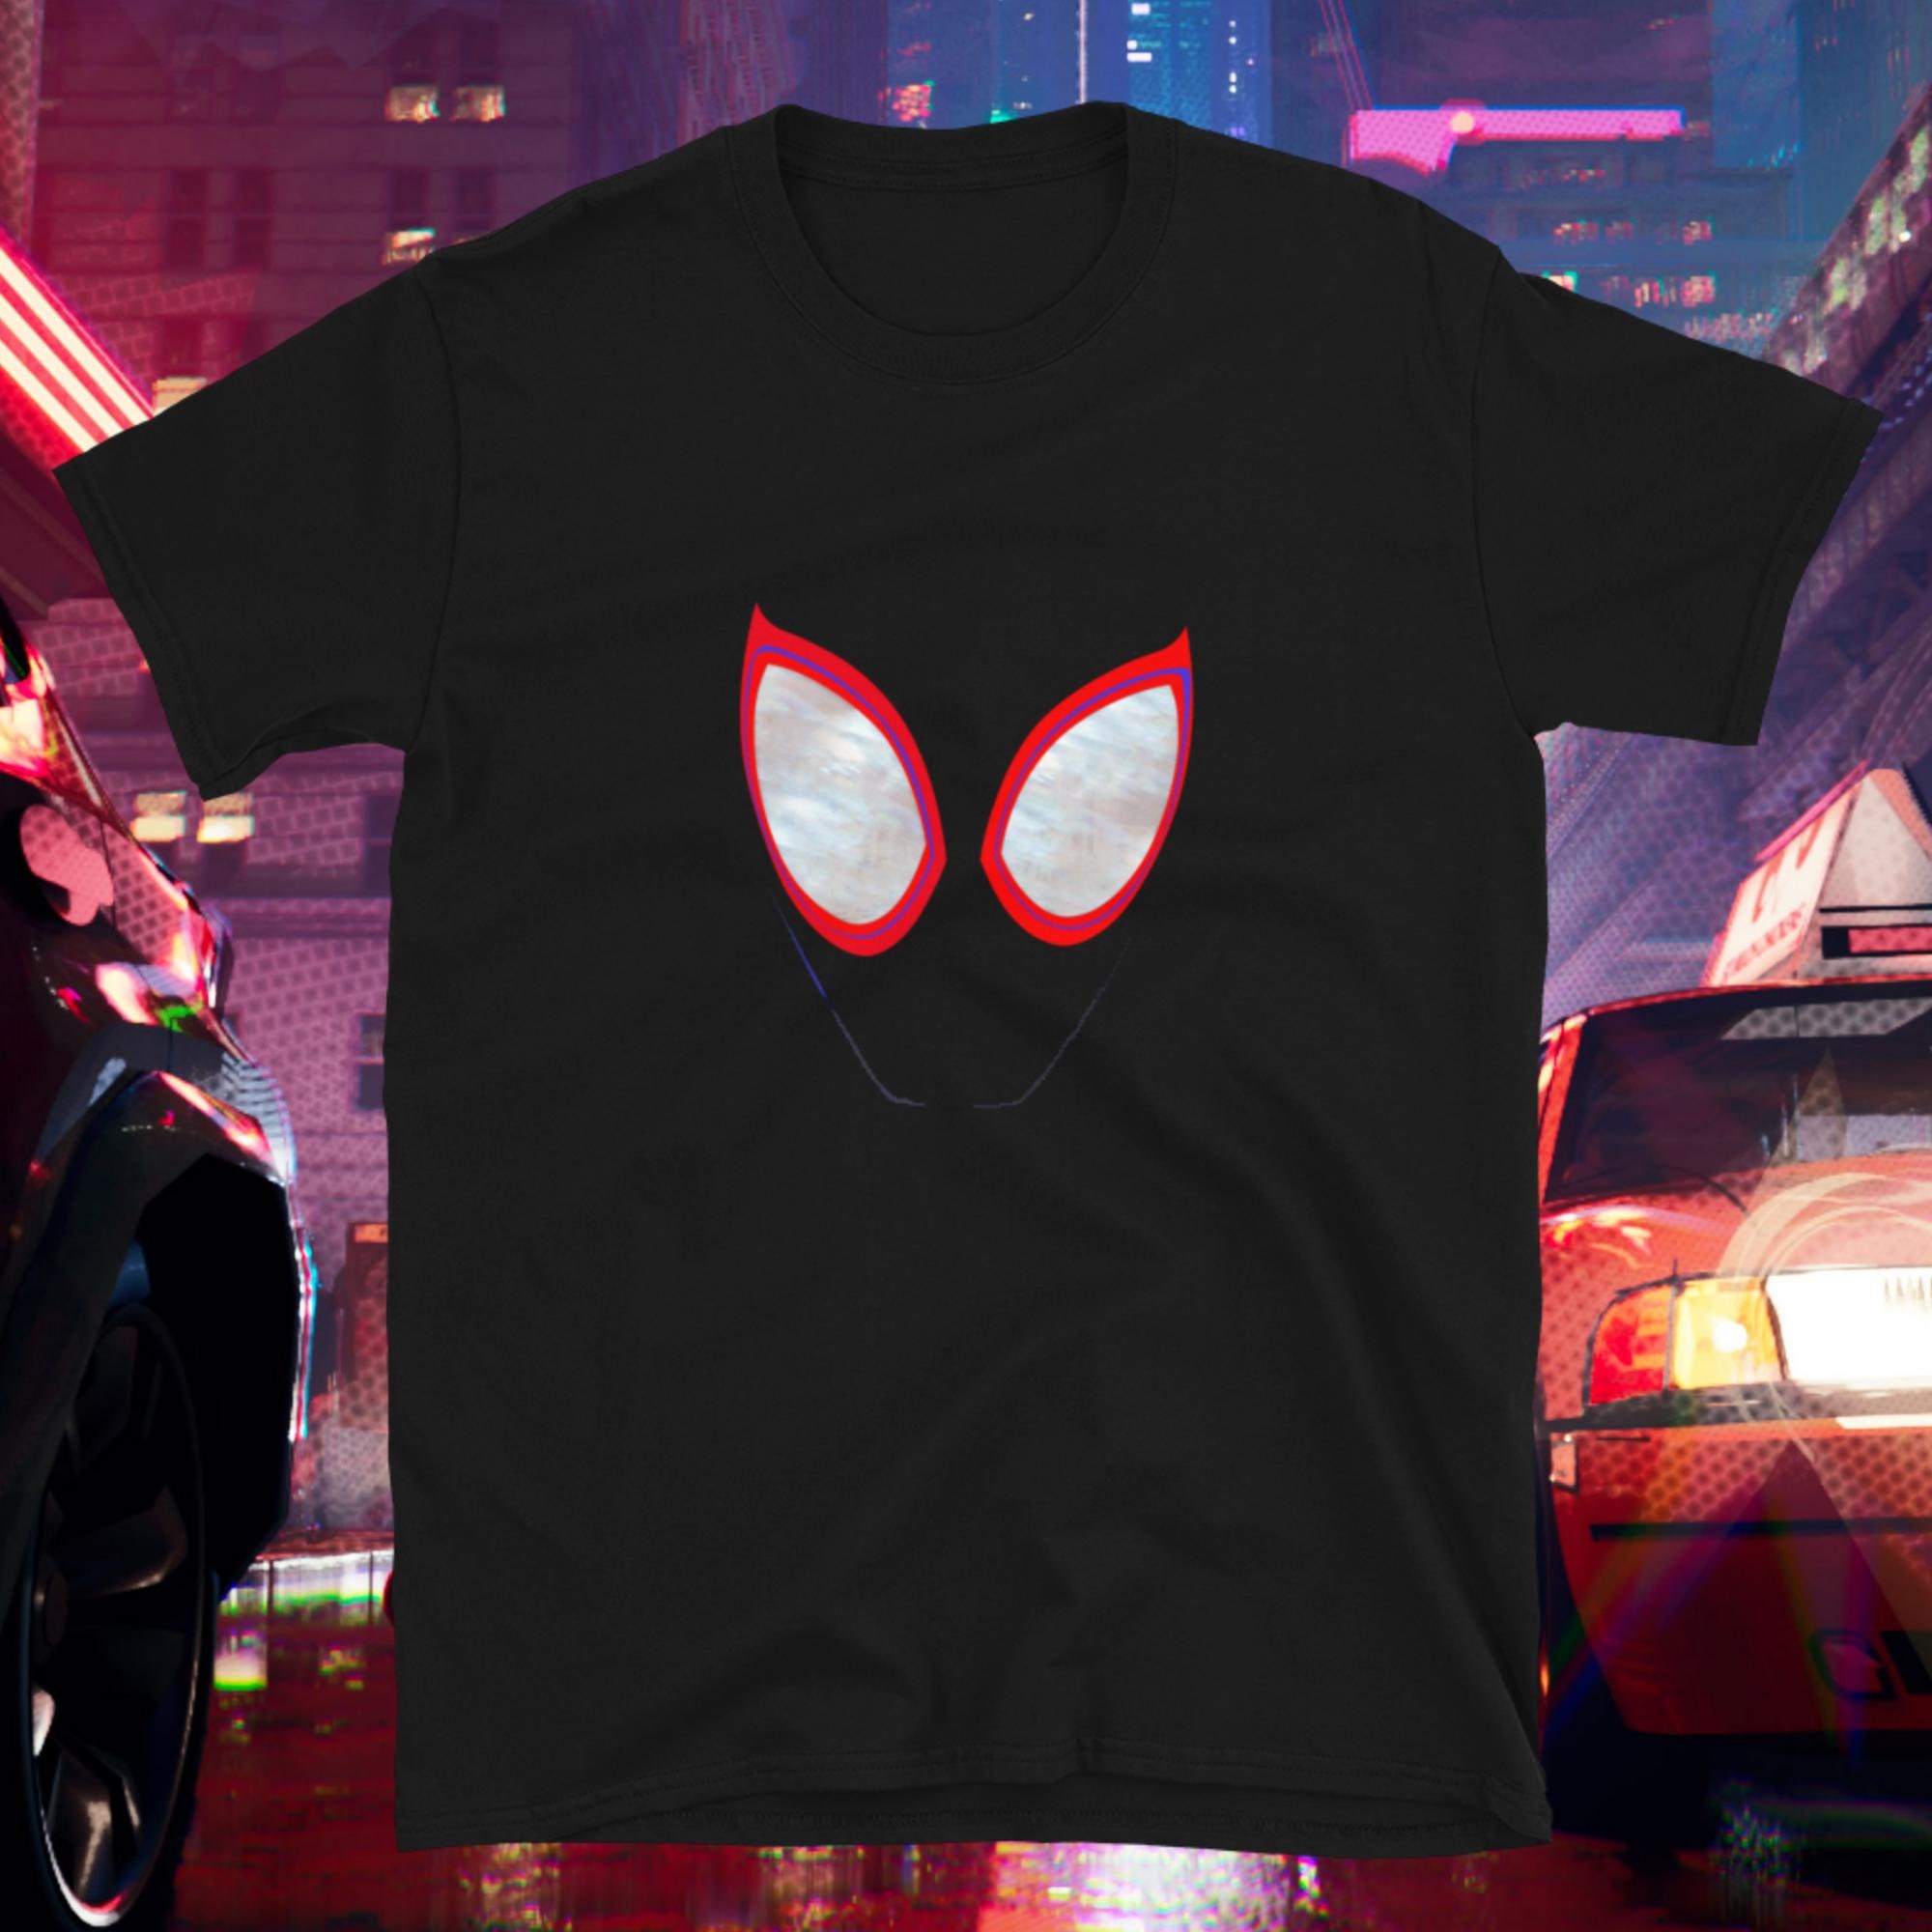 Spider-man Mens T-Shirt- Brooklyn New York Lapel Miles Morales Logo Back  (Small) 